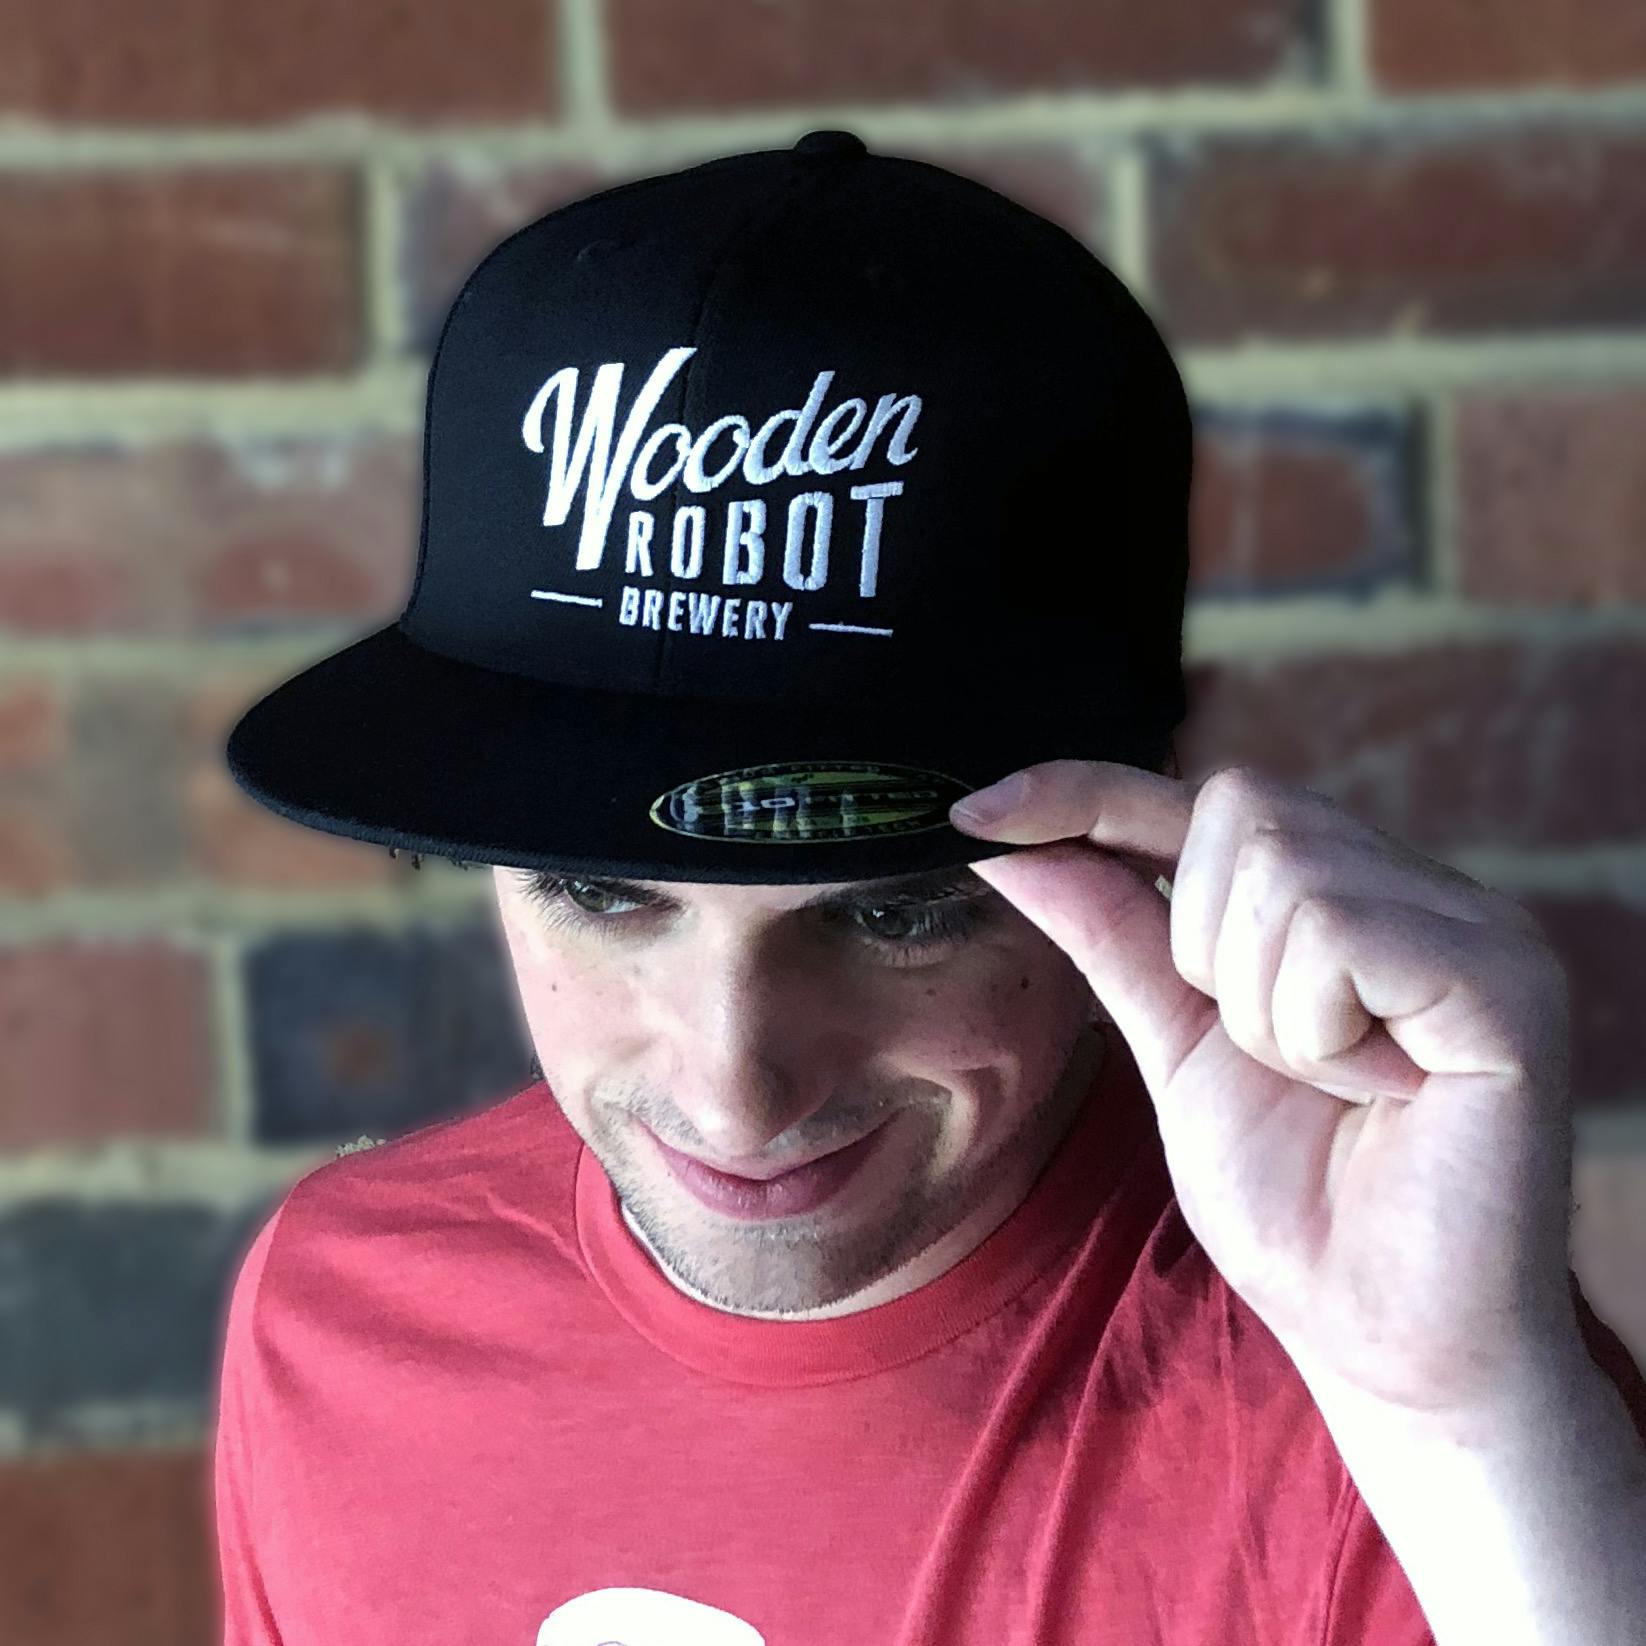 Suri lastig Correct Flat Brim Flexfit Hat | Wooden Robot Brewery Online Shop